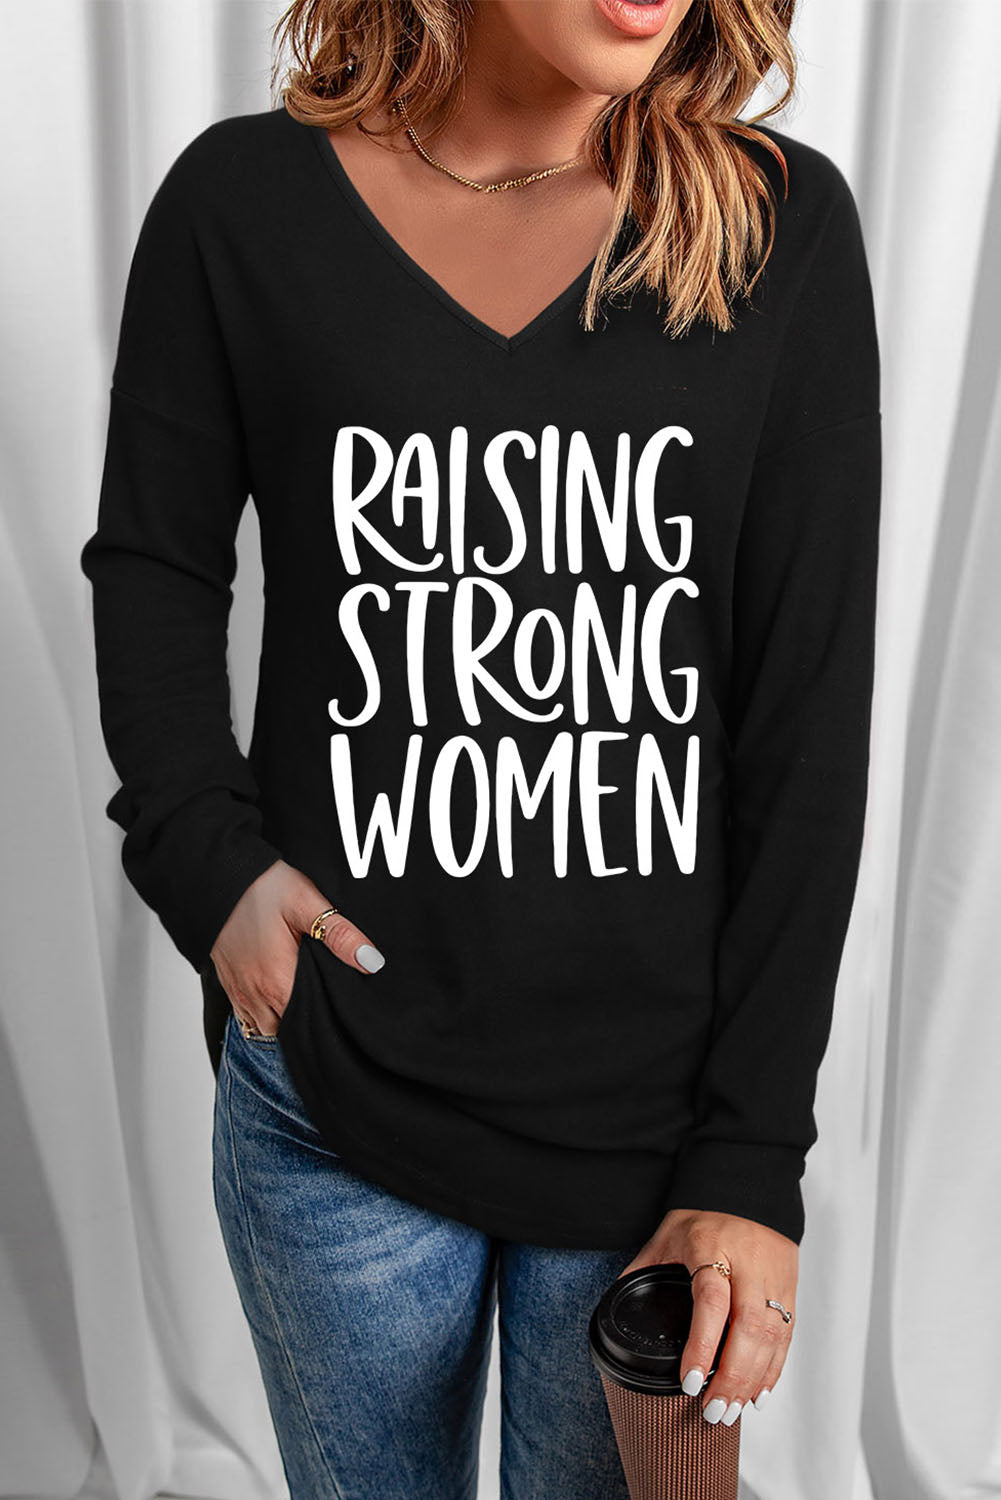 RAISING STRONG WOMEN Graphic V-Neck Top